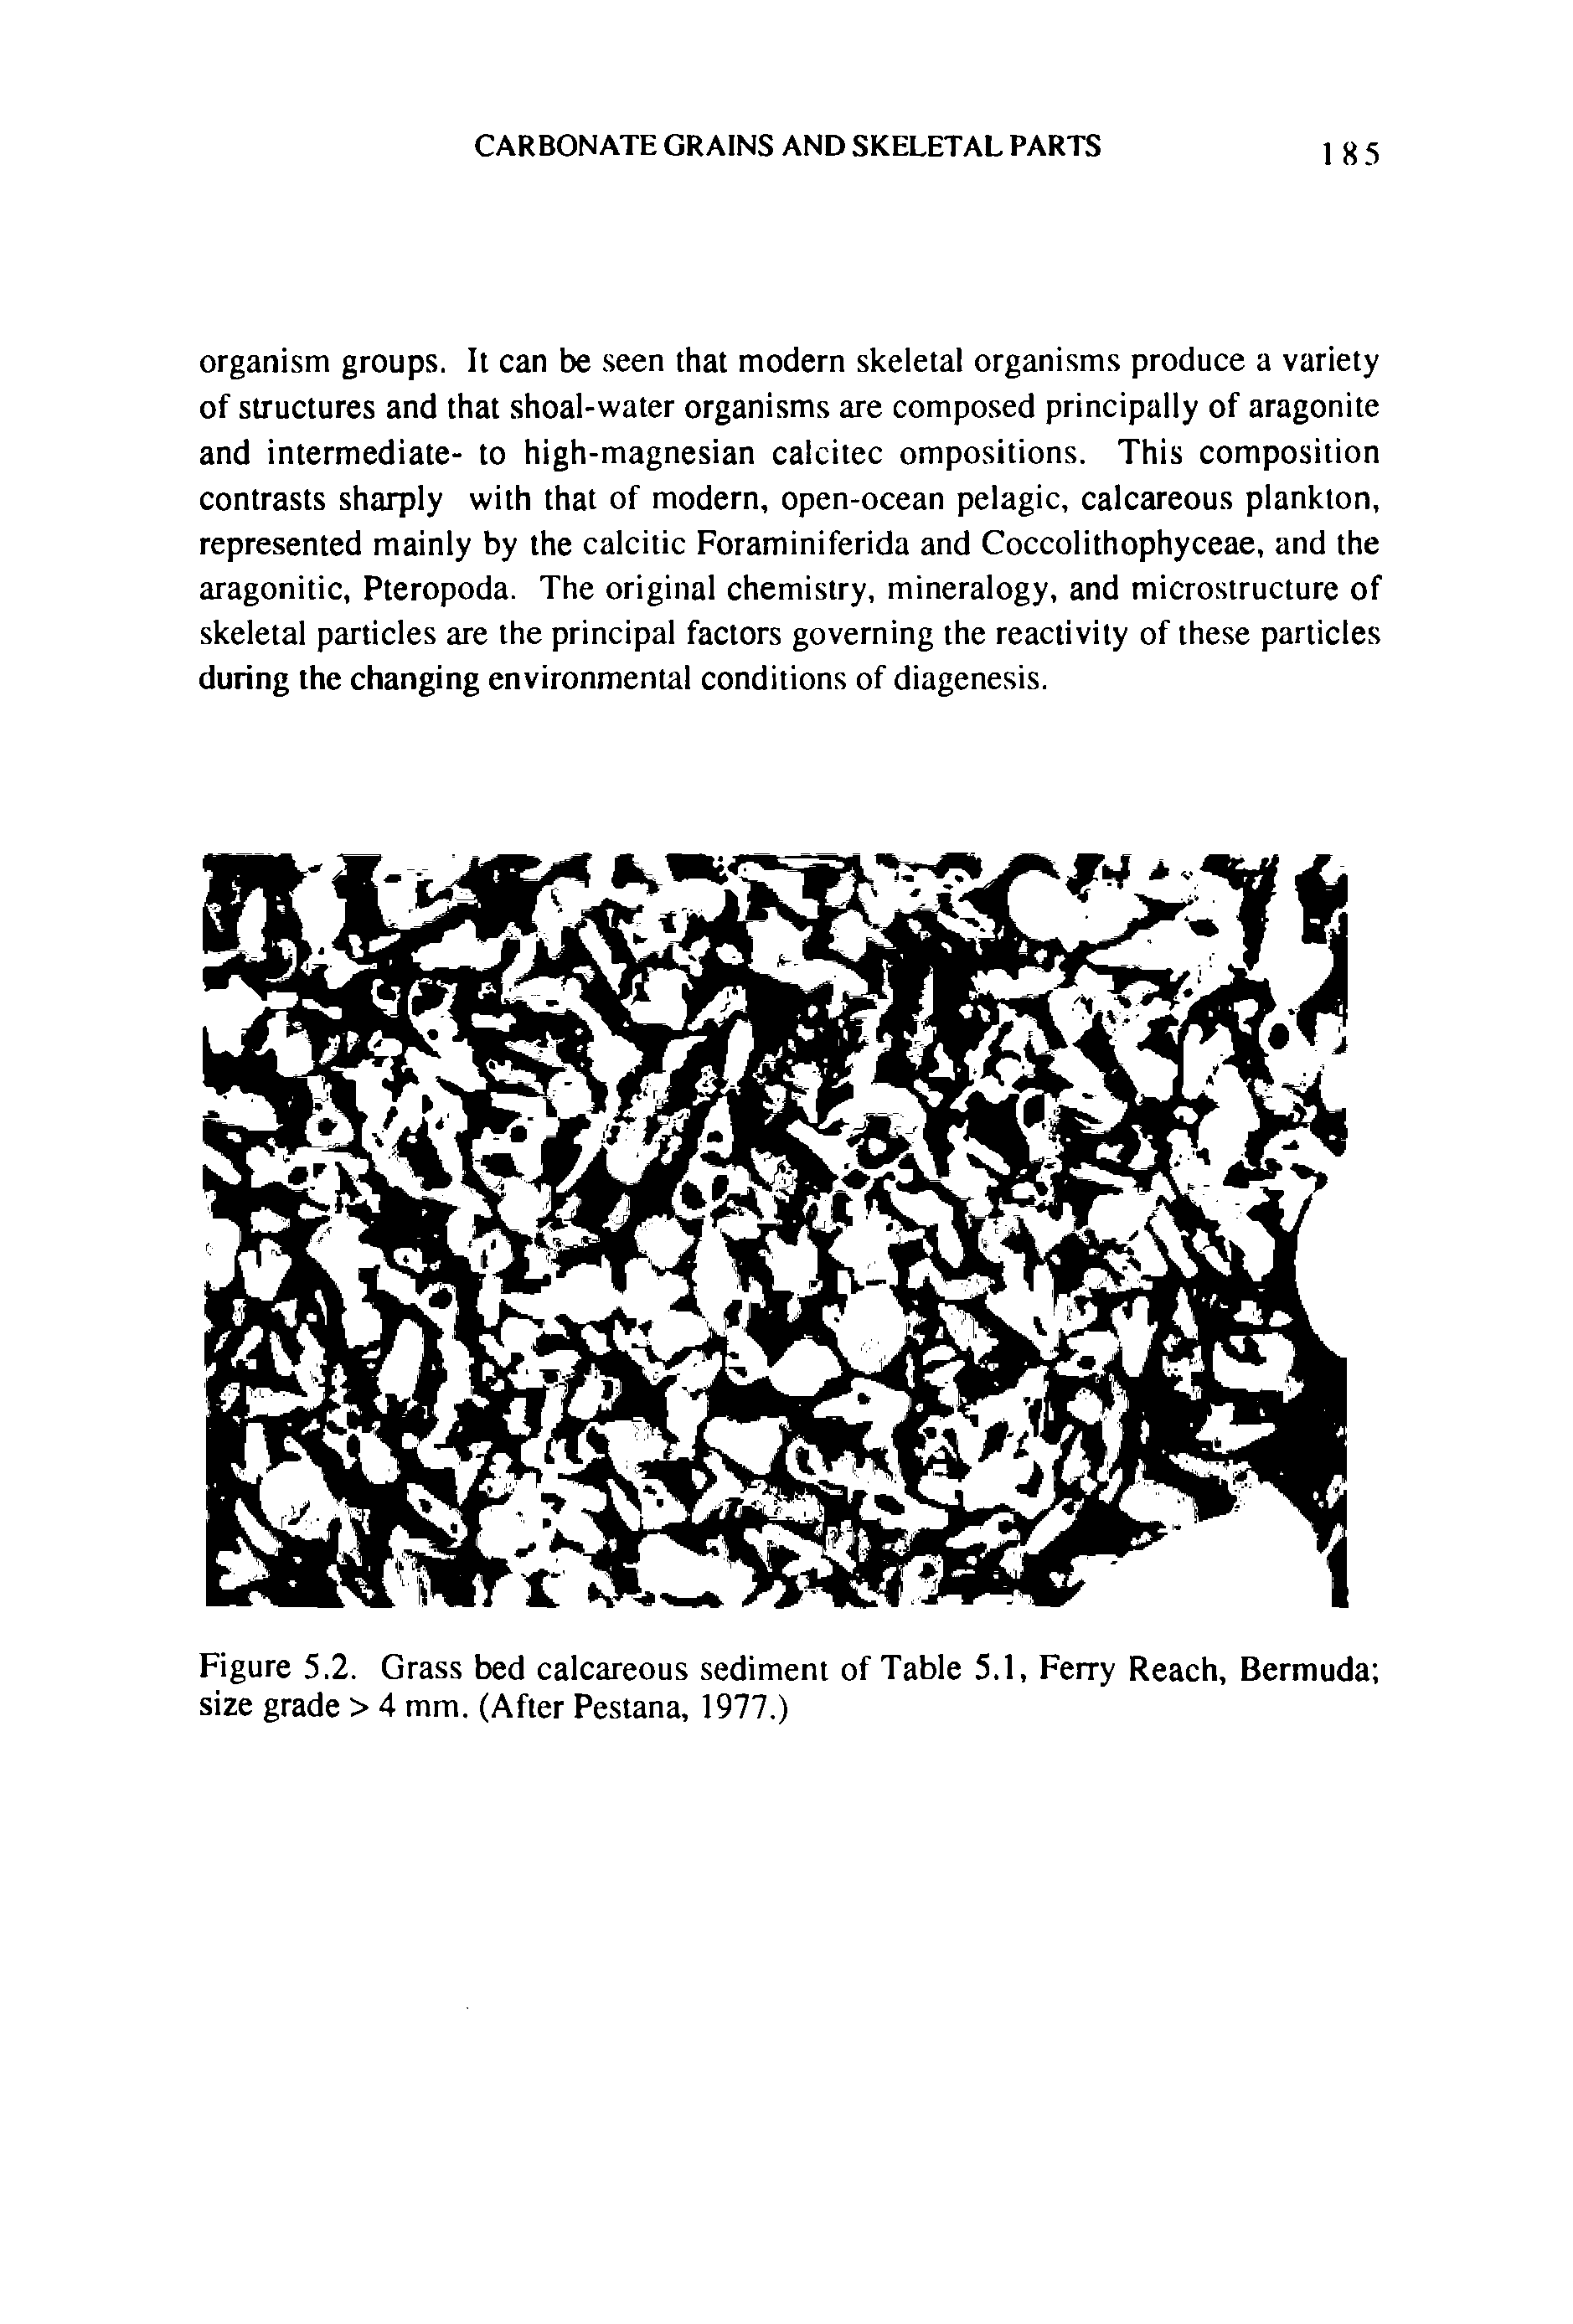 Figure 5.2. Grass bed calcareous sediment of Table 5.1, Ferry Reach, Bermuda size grade > 4 mm. (After Pestana, 1977.)...